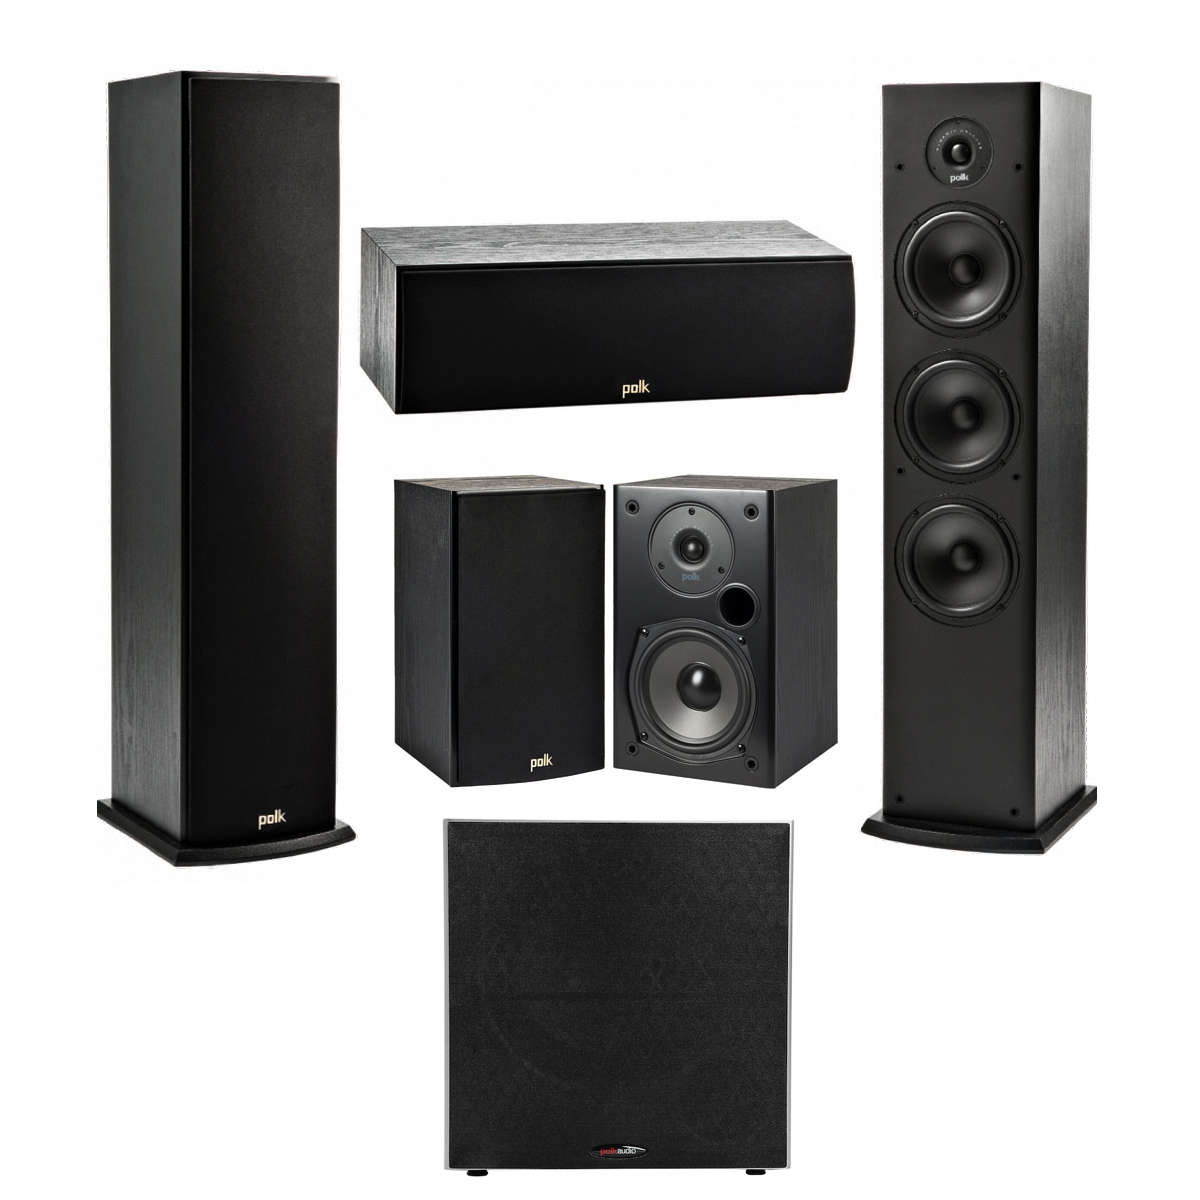 Buy Polk-Audio T50 floorstanding speakers Online in India at Lowest Price –  Home theater expert Store